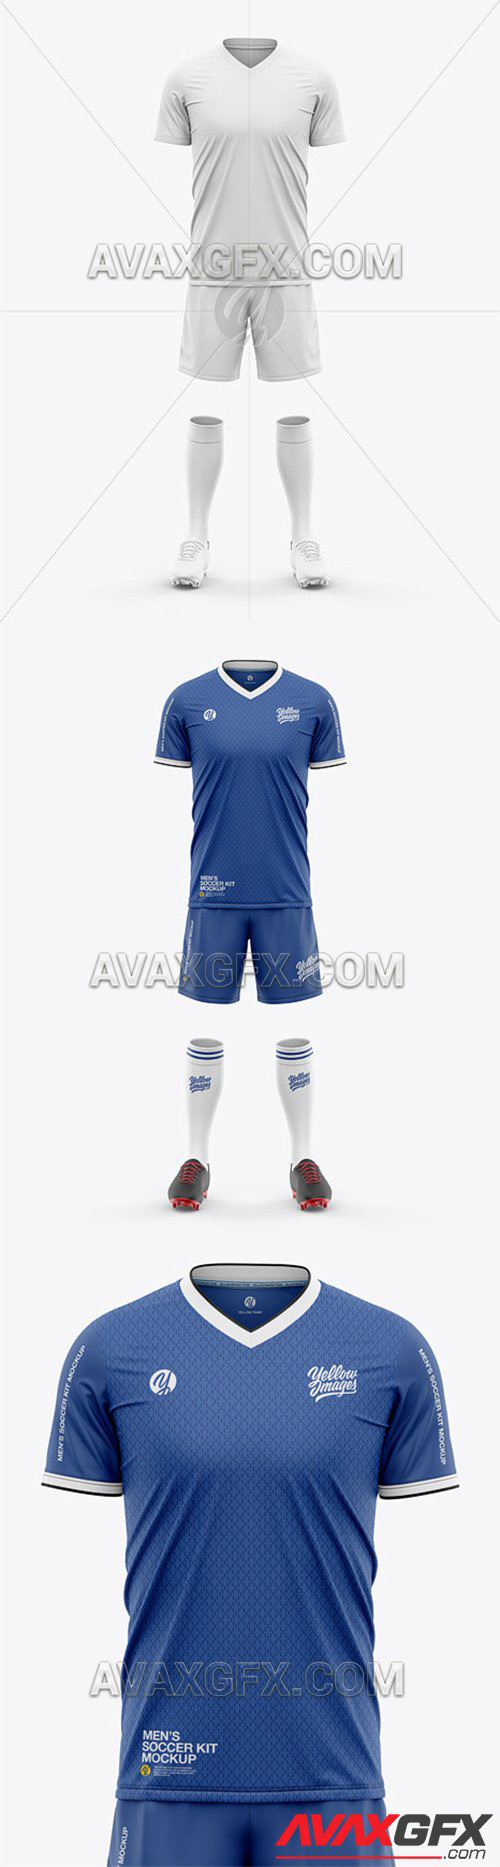 Download Men's Full Soccer Kit with V-Neck Jersey Mockup - Front View - Football Kit 56983 » AVAXGFX ...